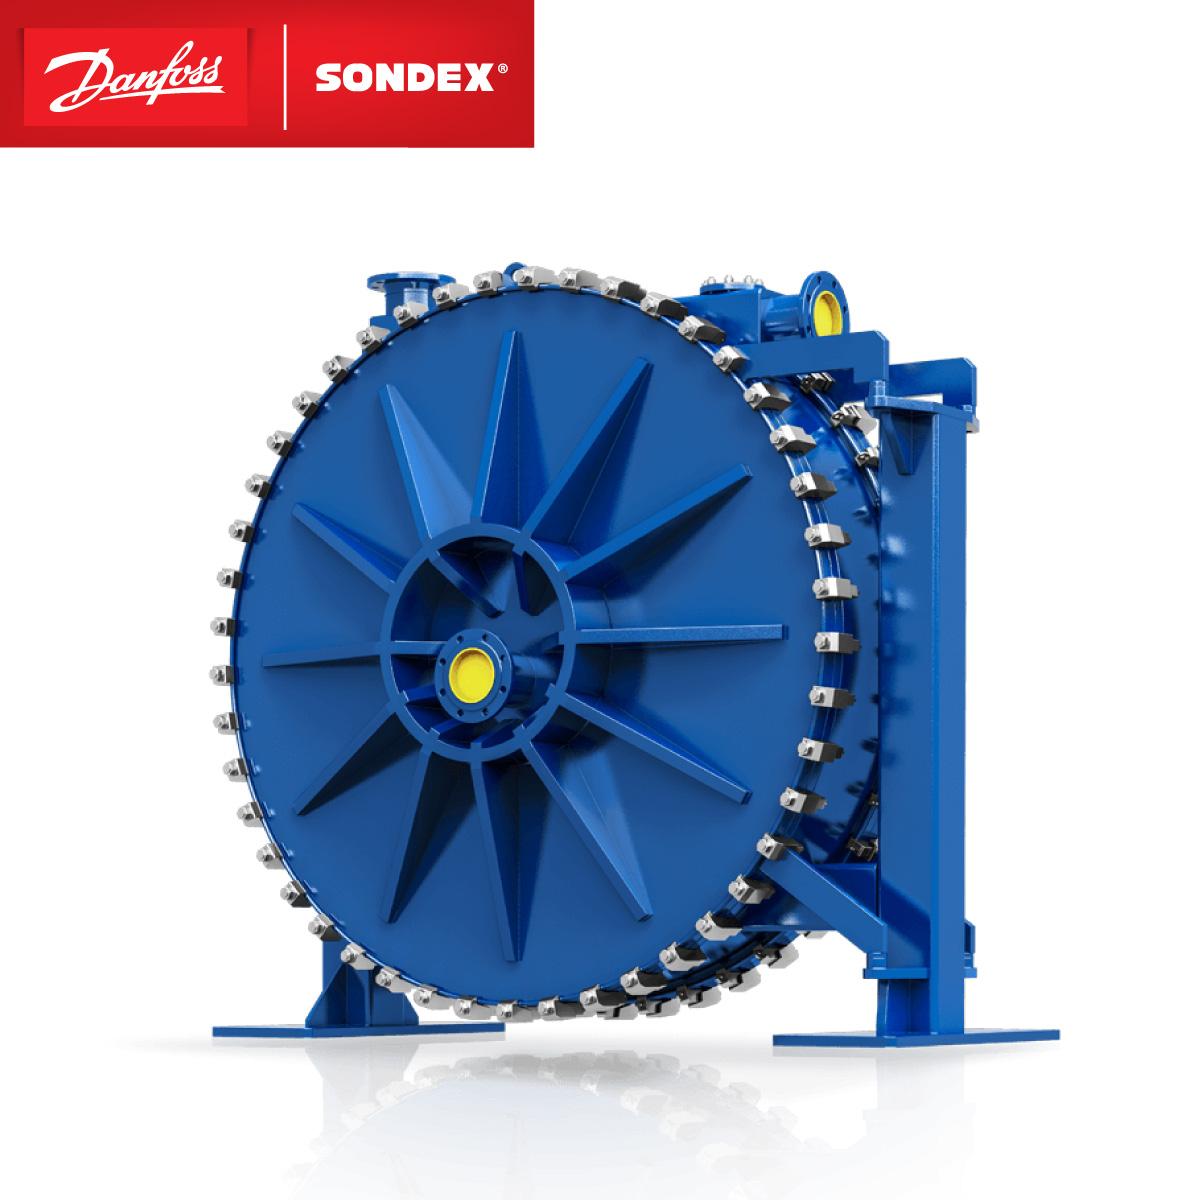 Product SONDEX spiral heat exchanger - Geurts Heat Exchangers image